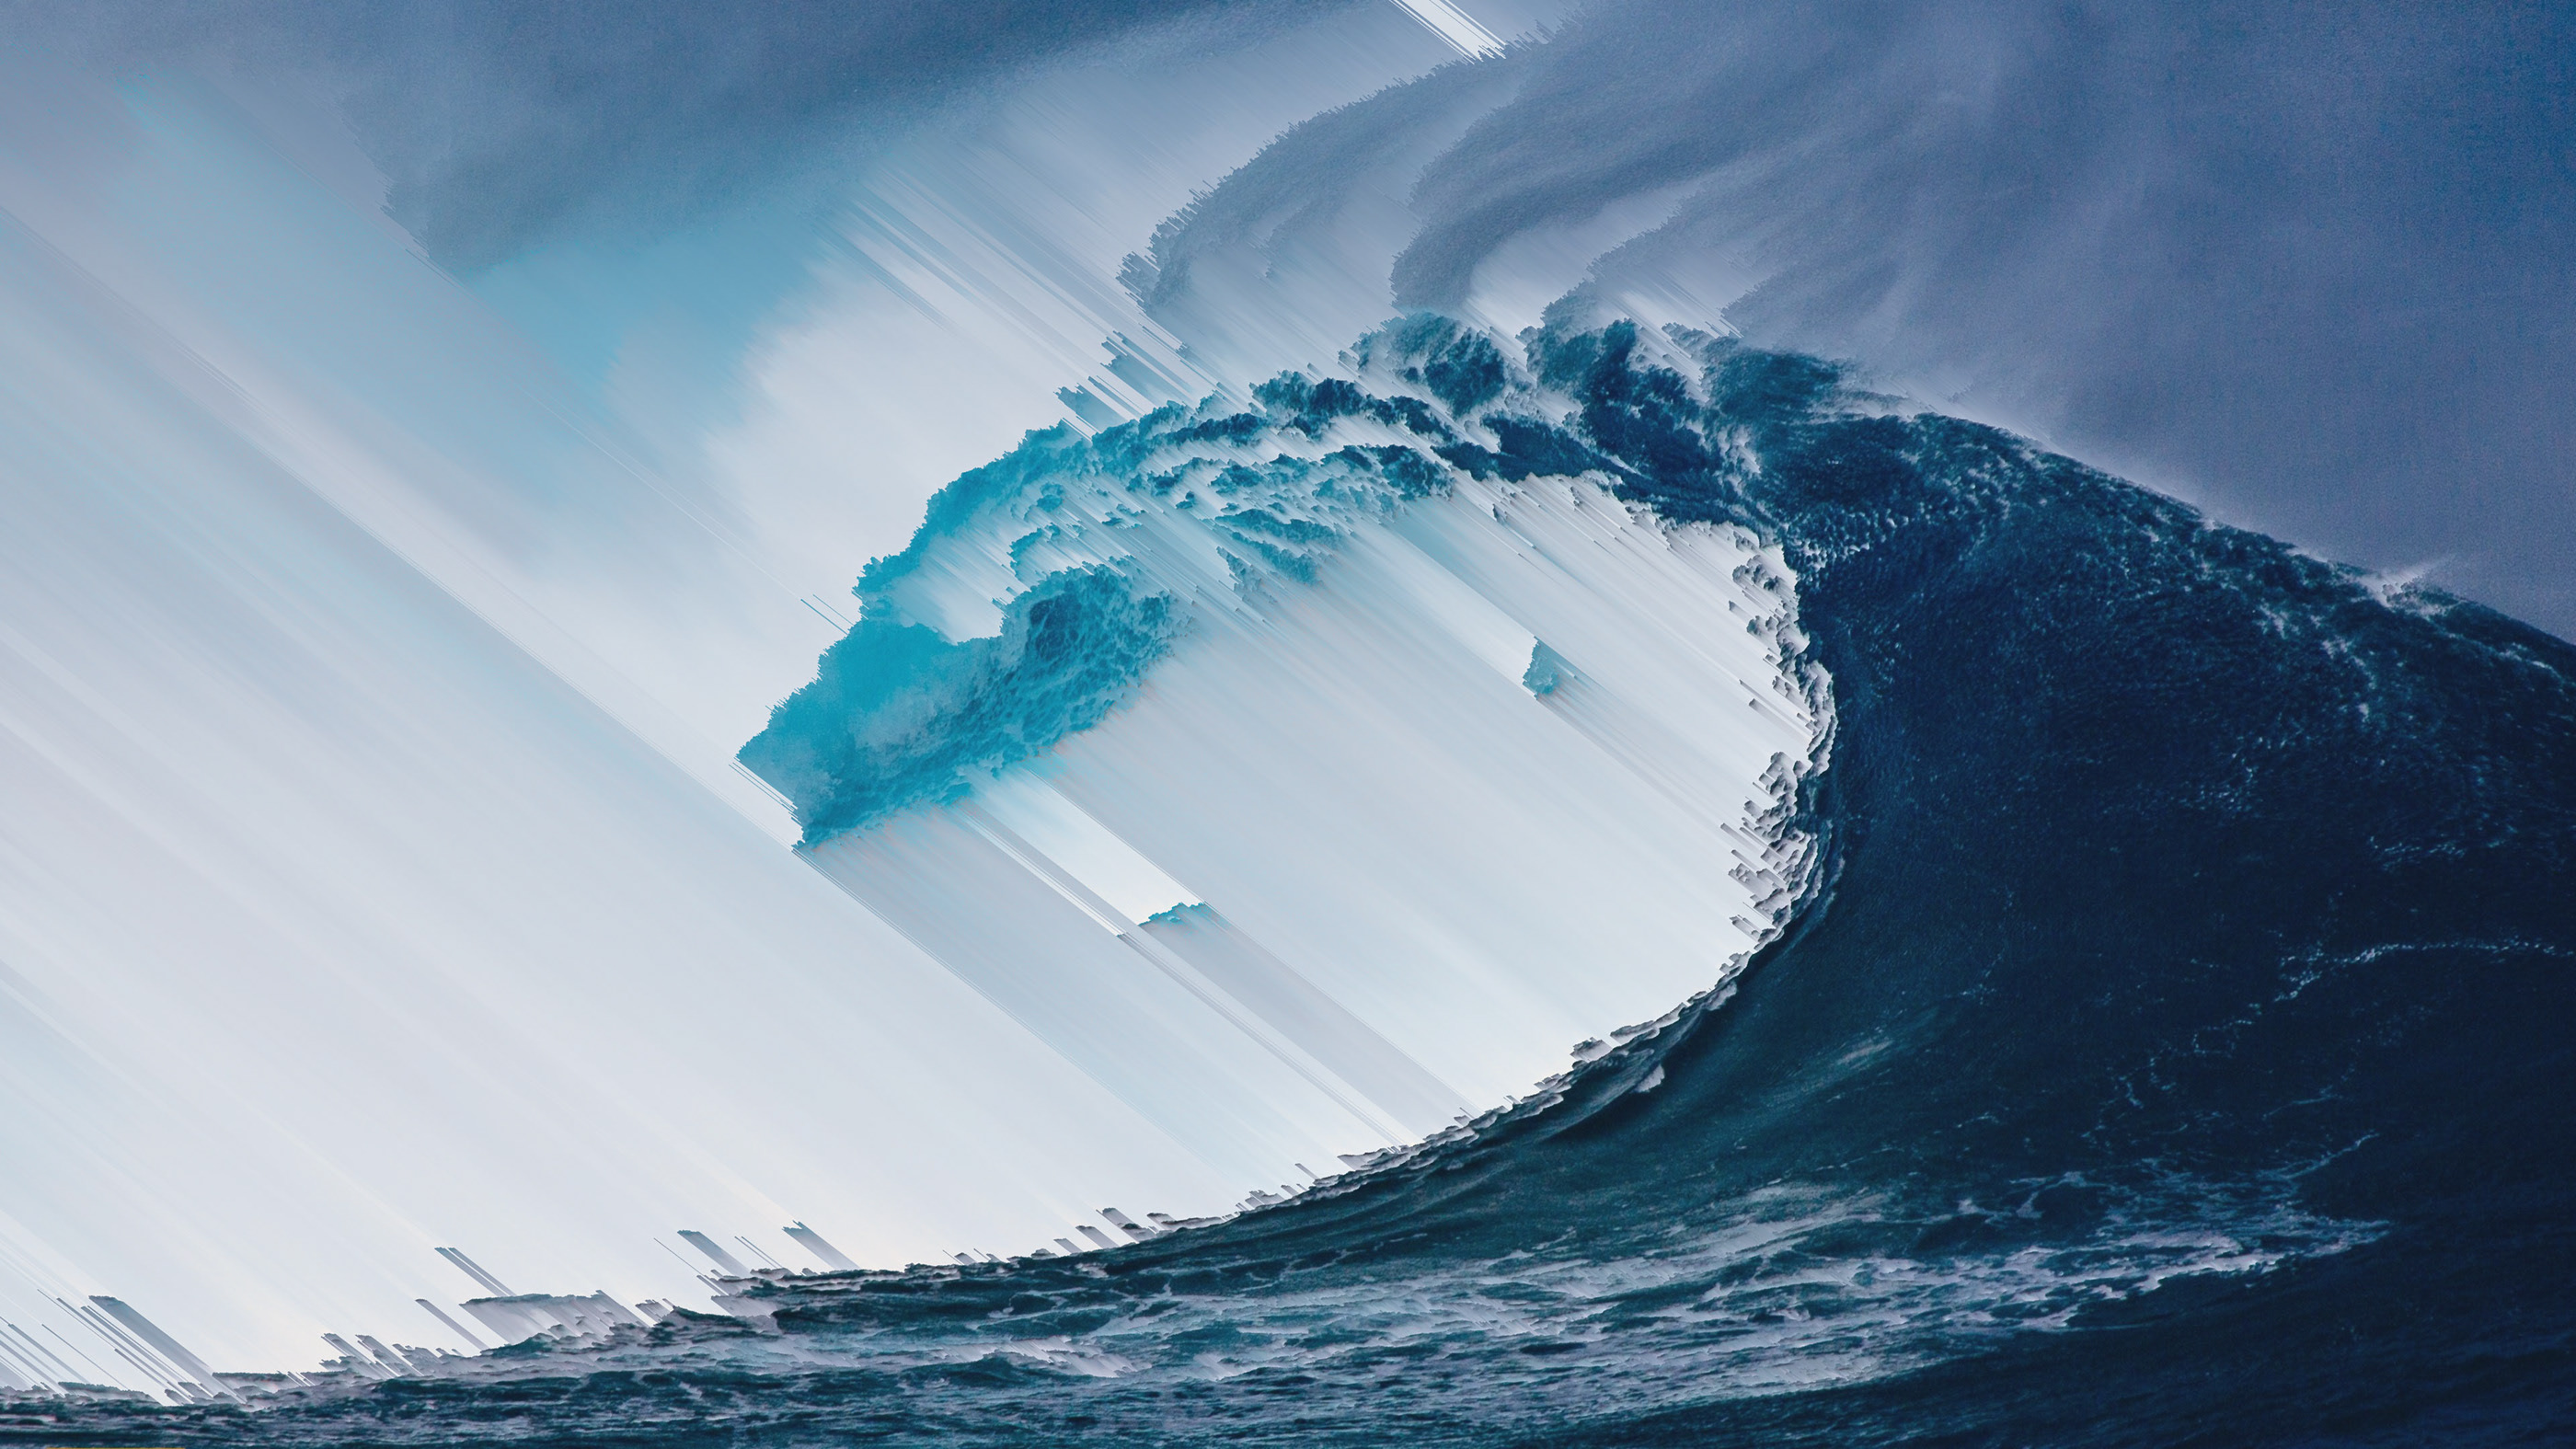 General 2800x1575 digital art artwork sea waves nature abstract glitch art